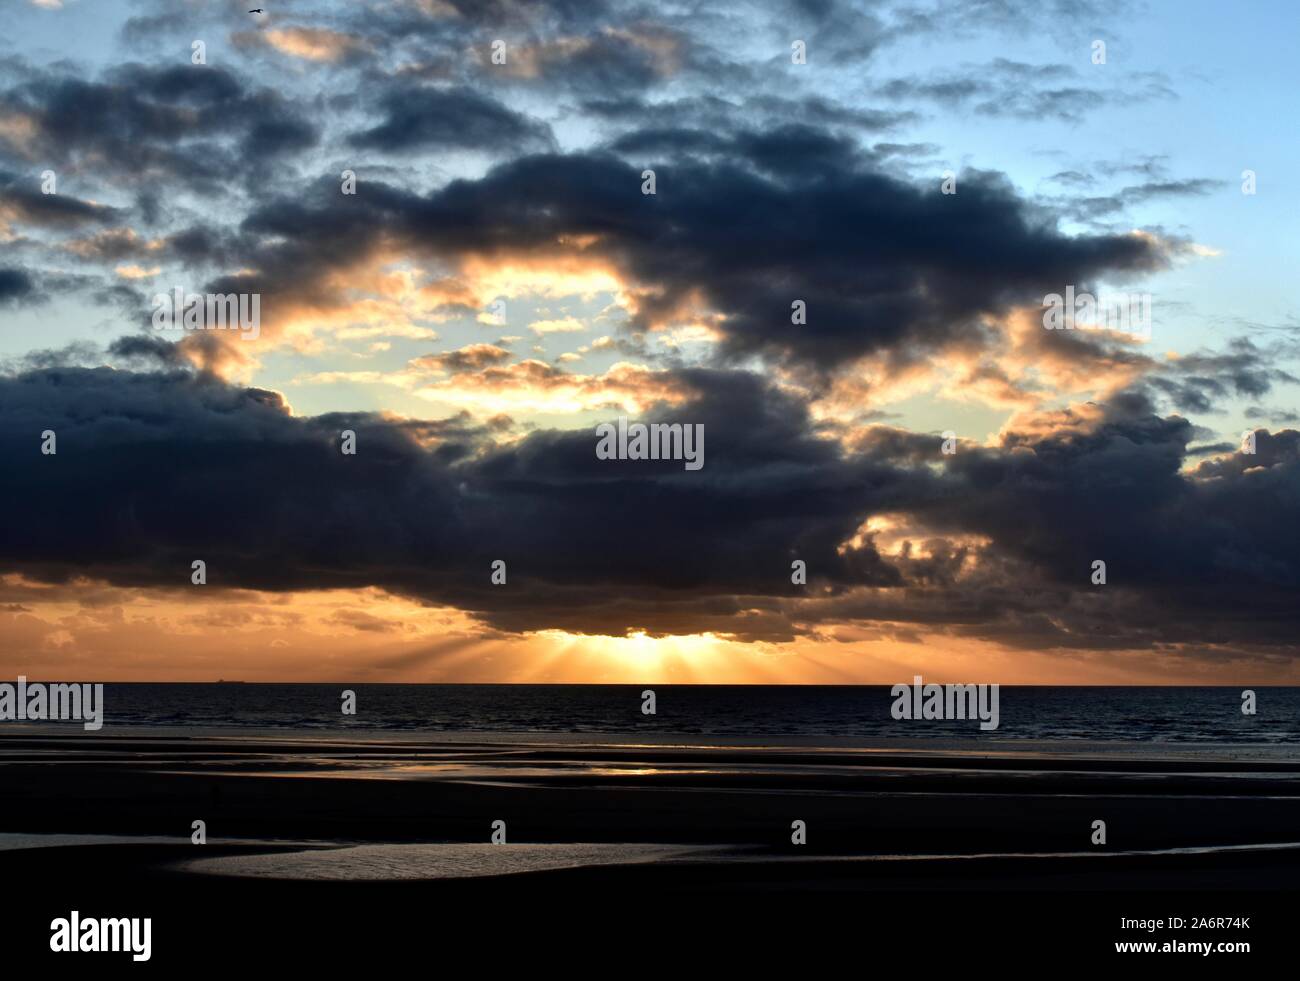 Blackpoll Norden Strand bei Ebbe kurz vor Sonnenuntergang. Stockfoto